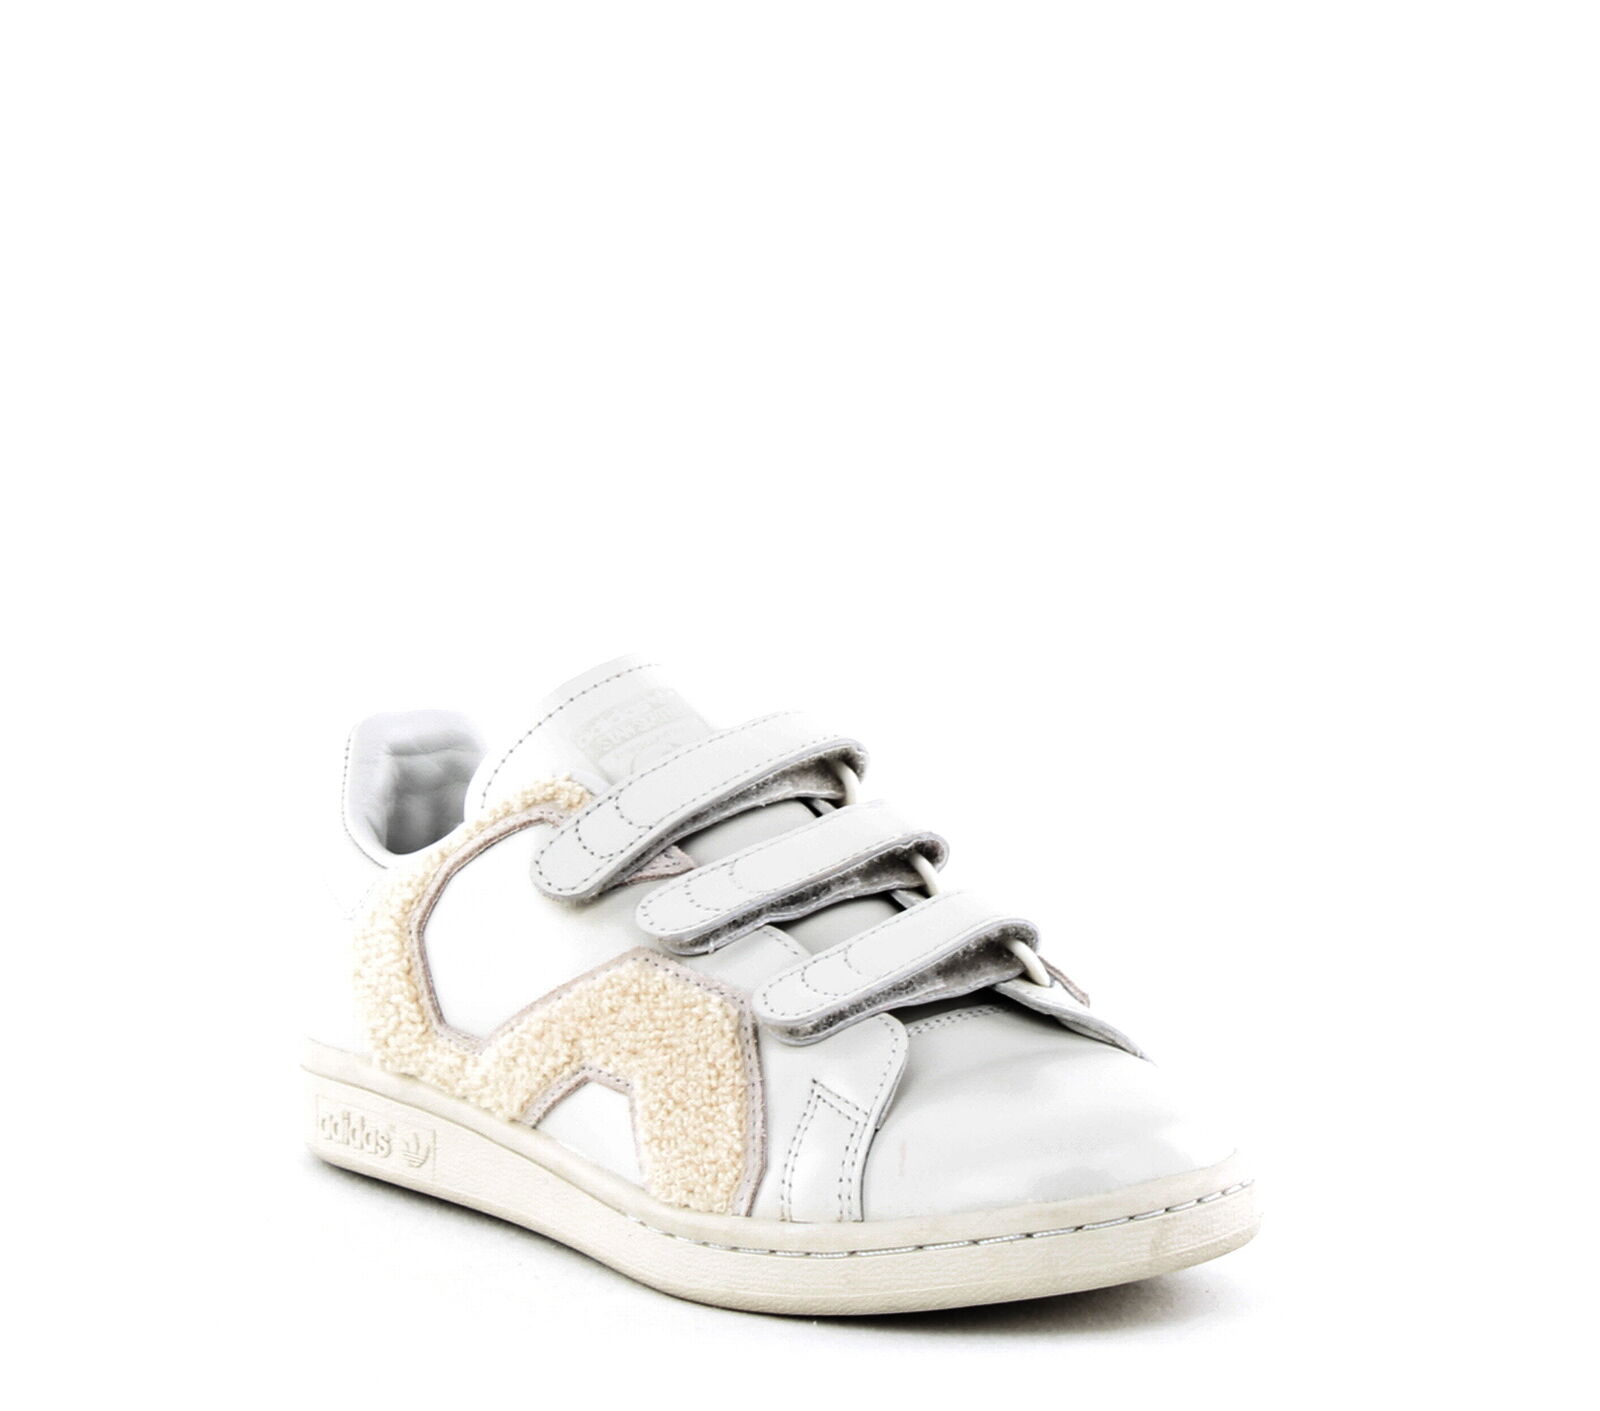 Adidas by Raf Simons | RS Stan Smith Comfort Badge Sneakers | Tan | 6.5 M